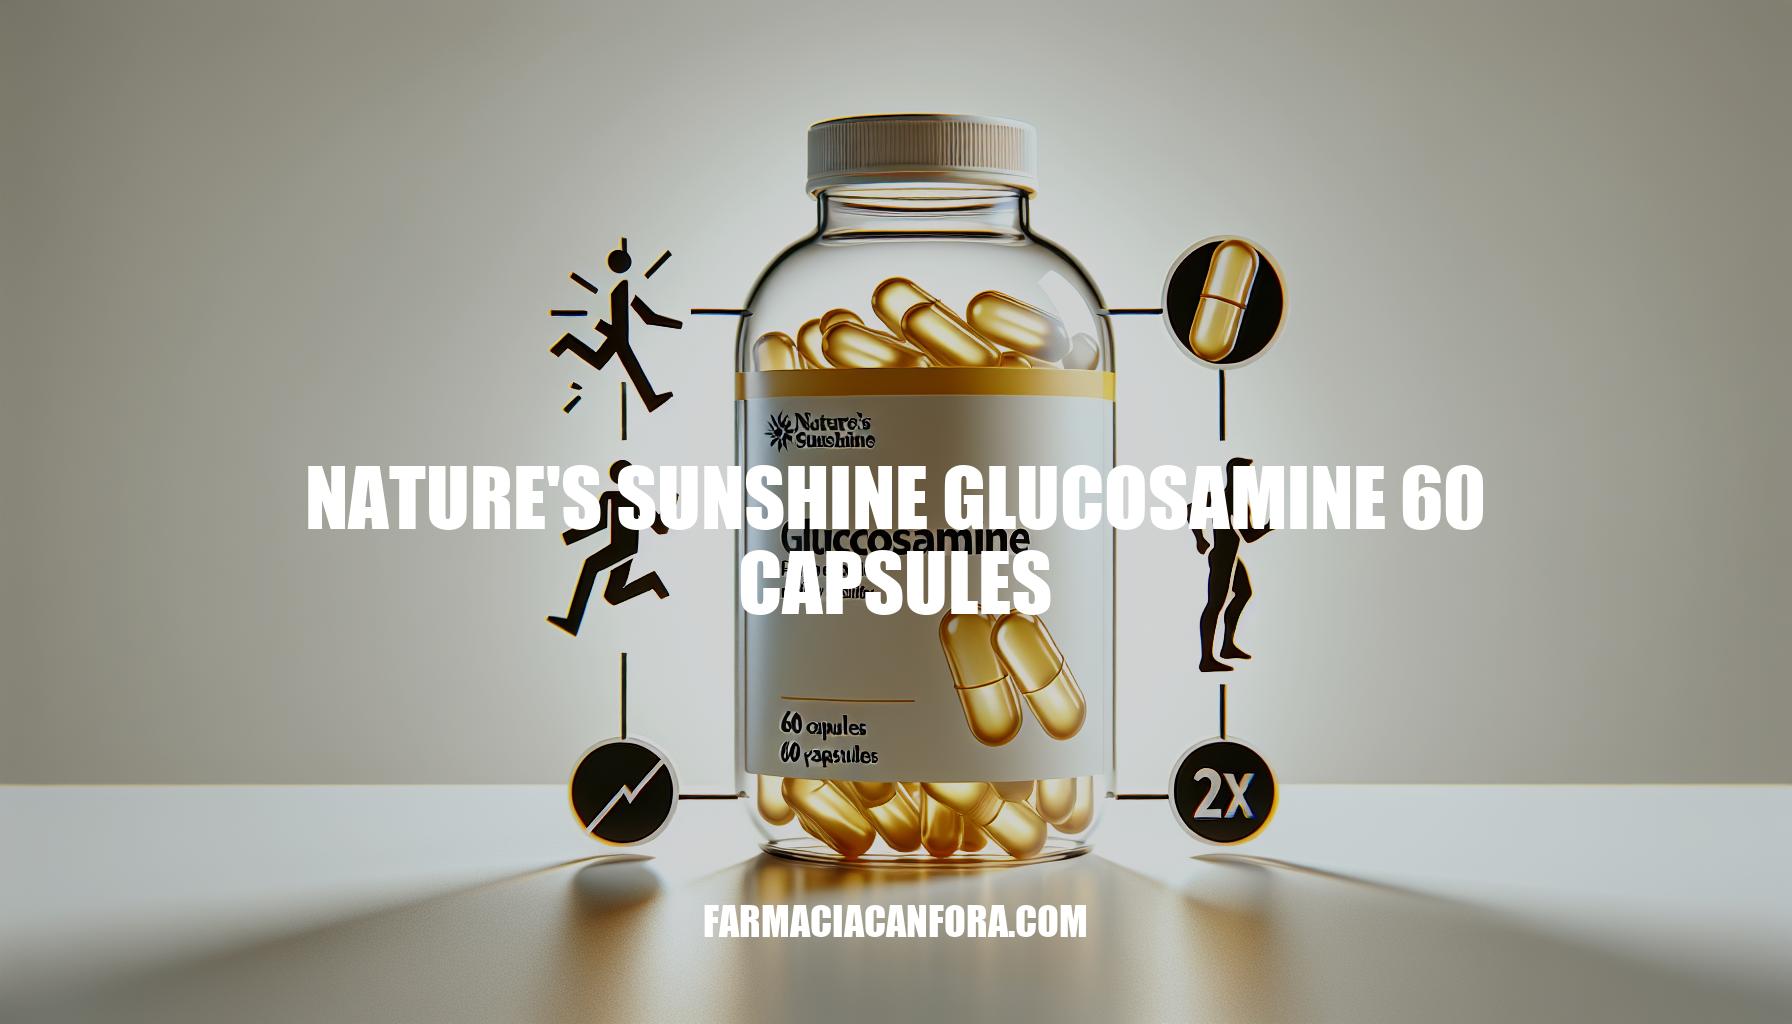 Nature's Sunshine Glucosamine 60 Capsules: Benefits and Dosage